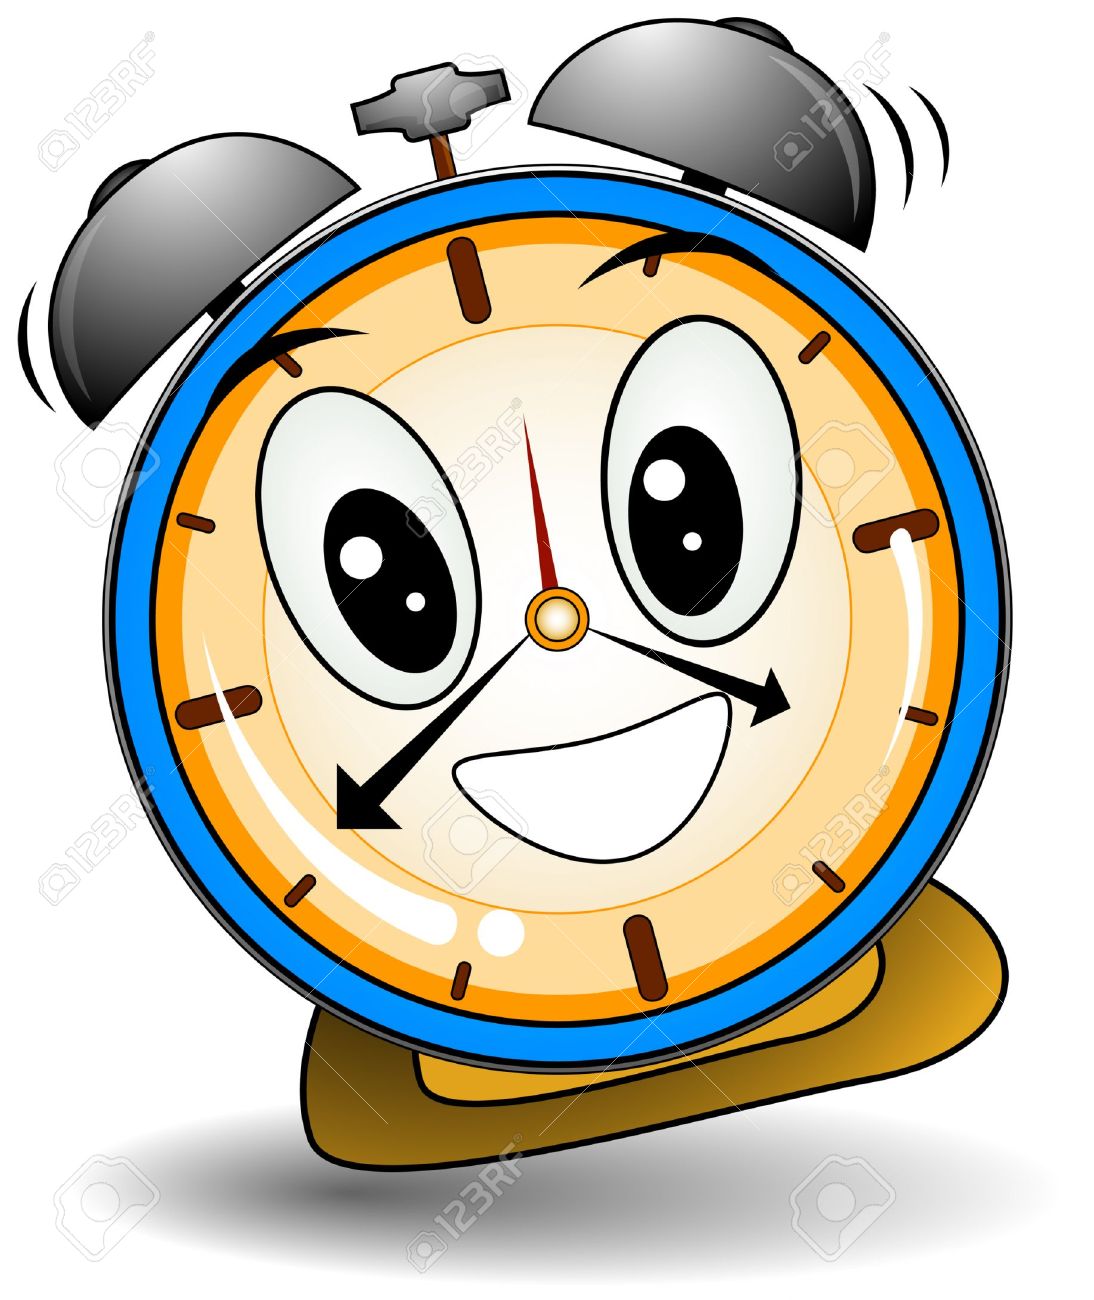 free animated alarm clock clipart - photo #5